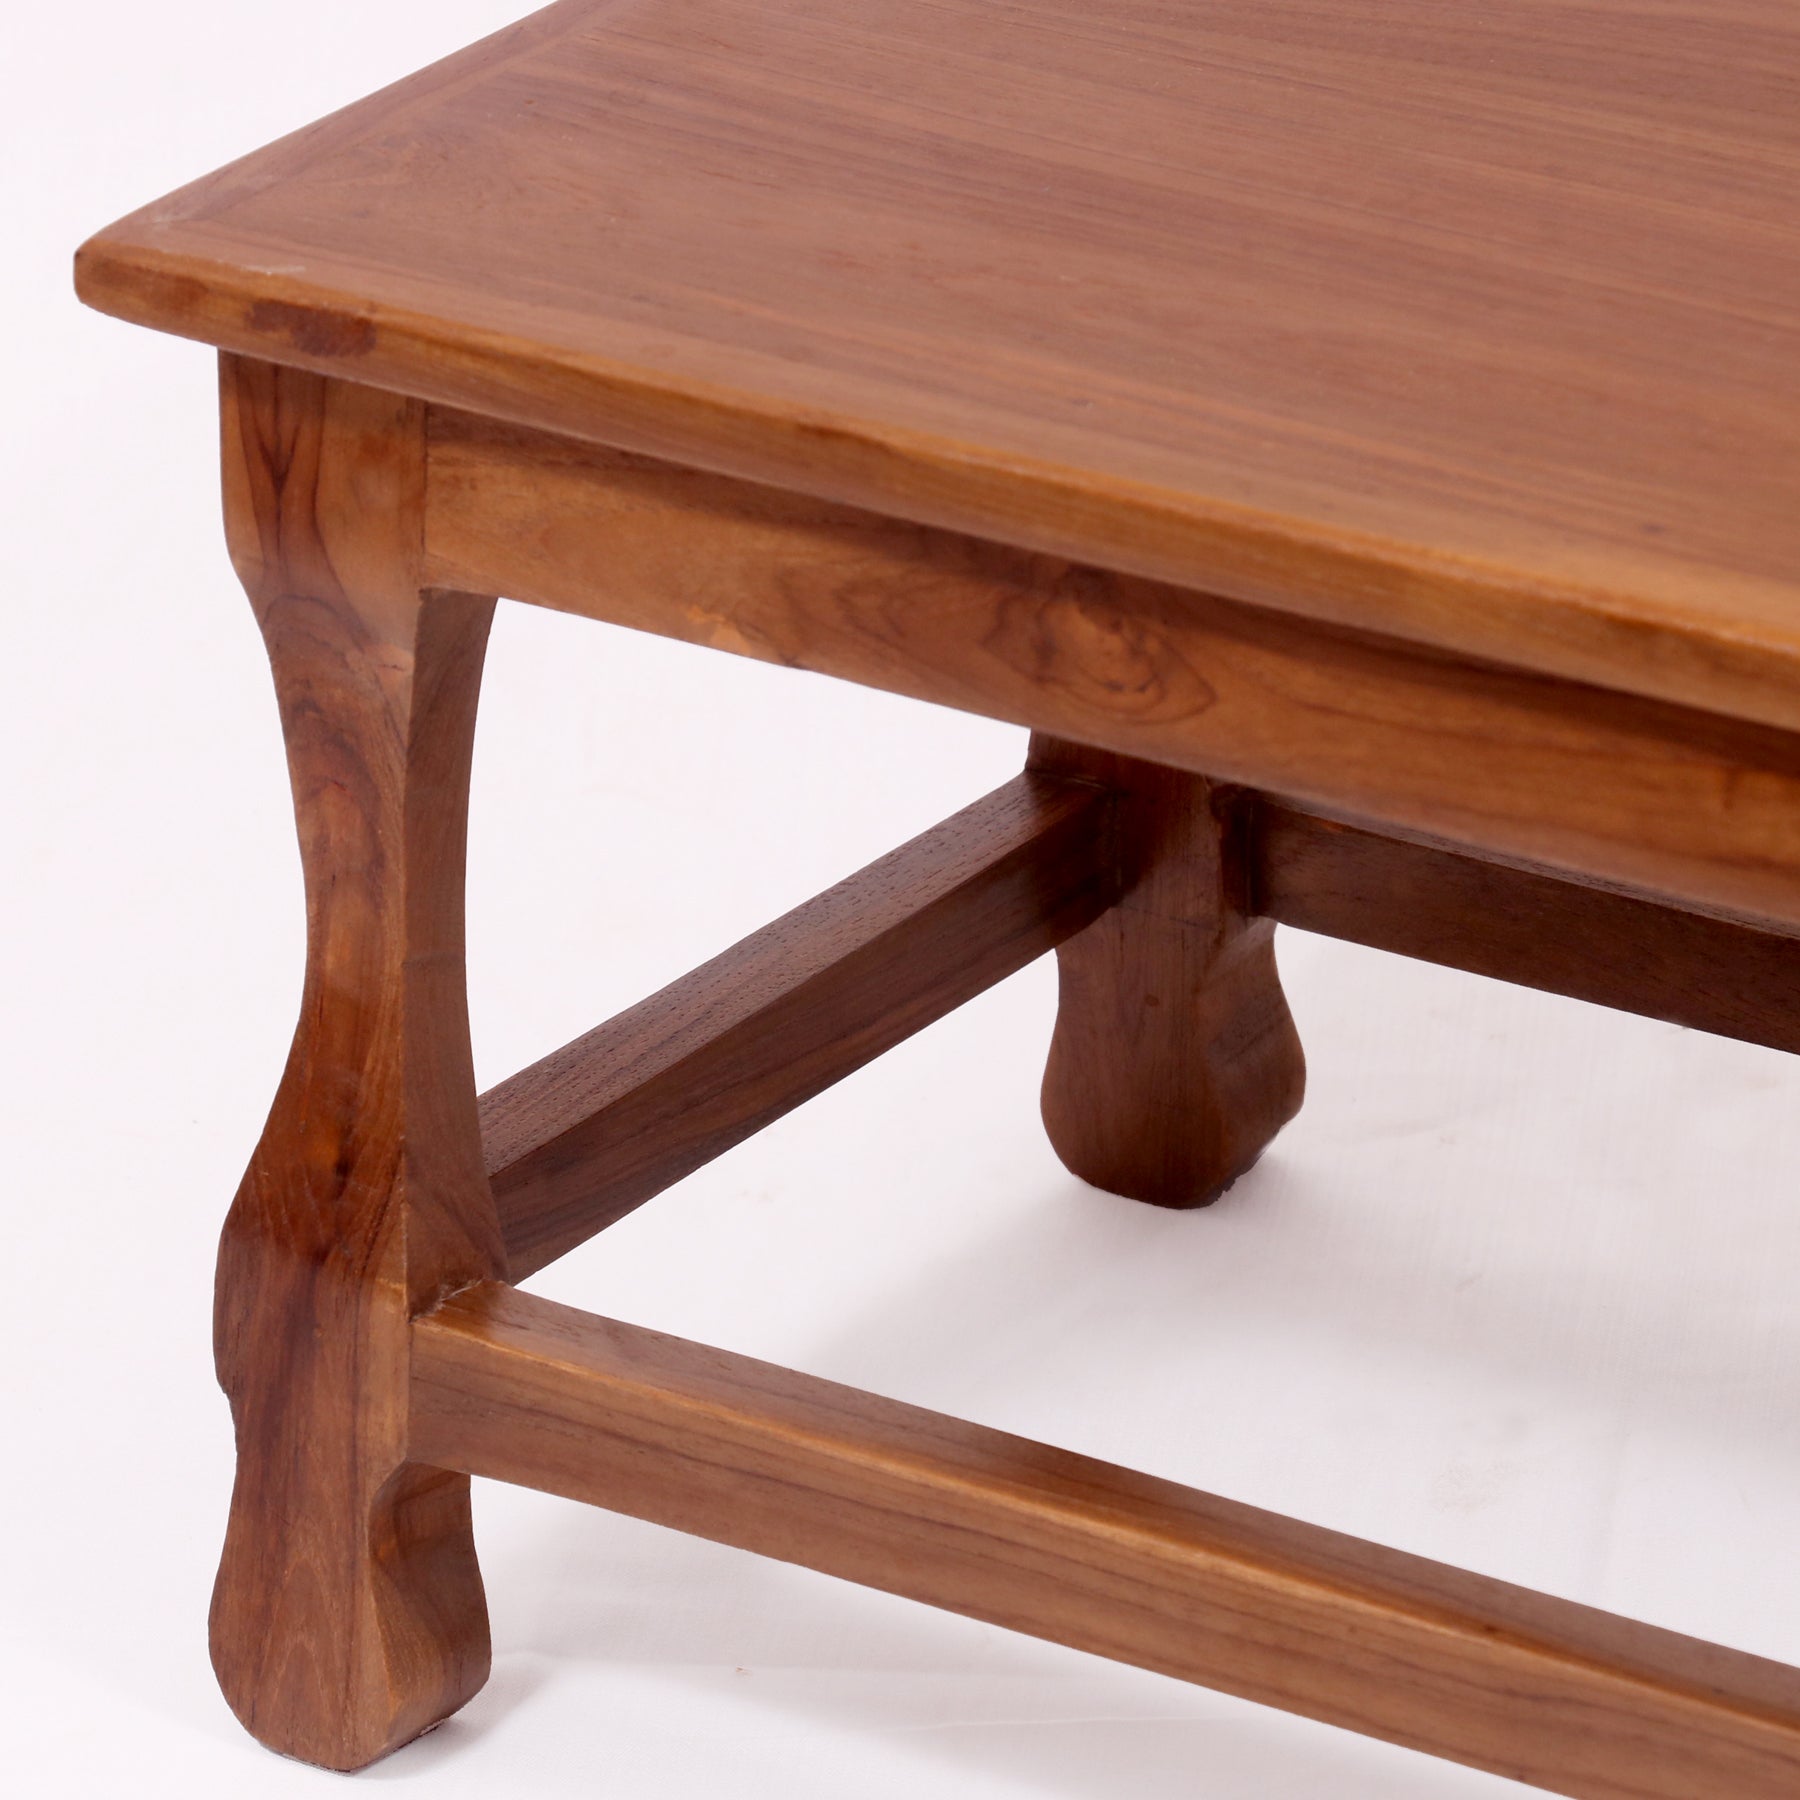 Solid Wood simple Table Stool